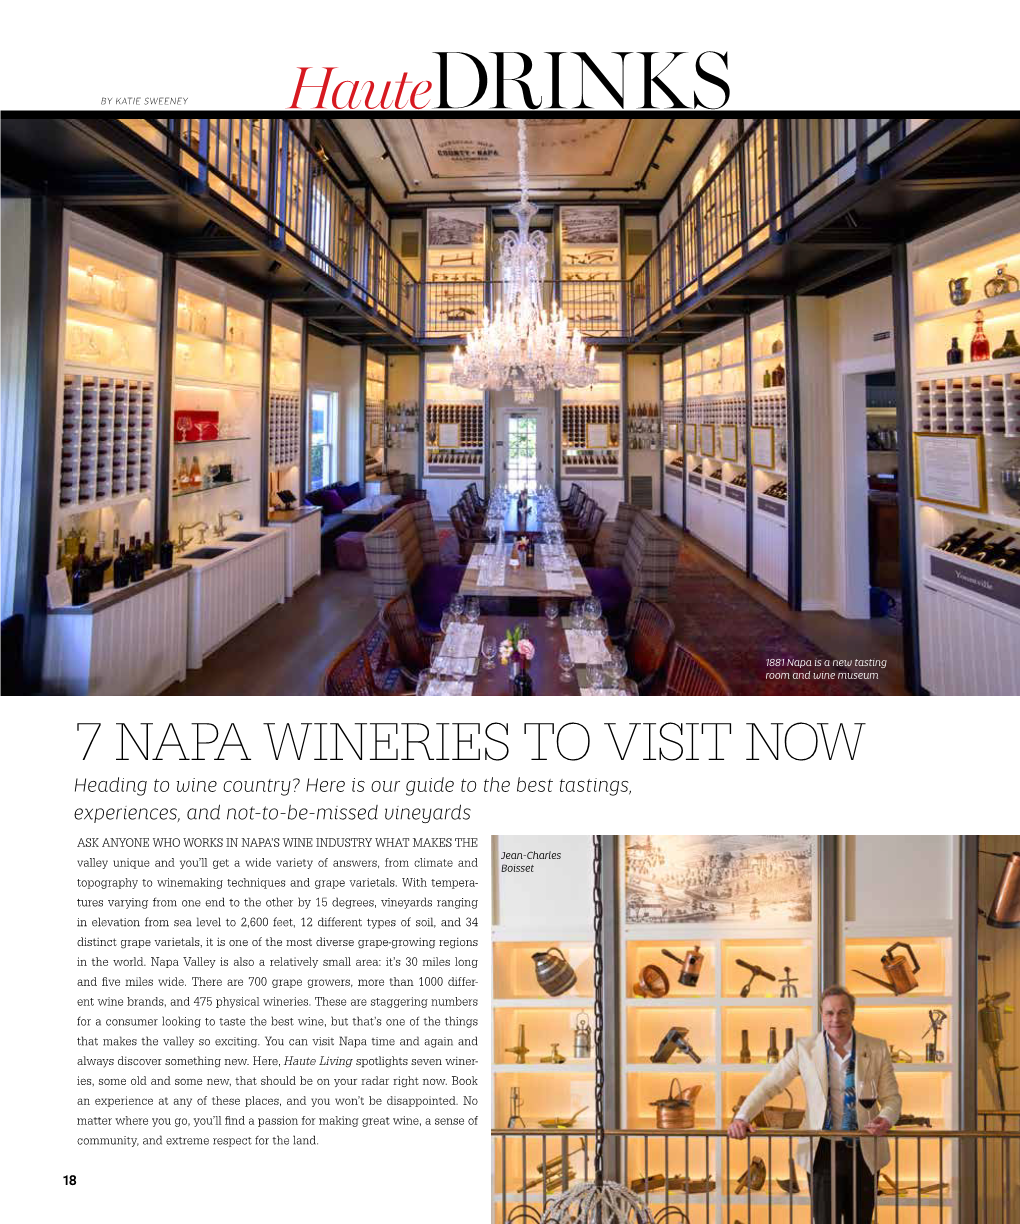 7 Napa Wineries to Visit